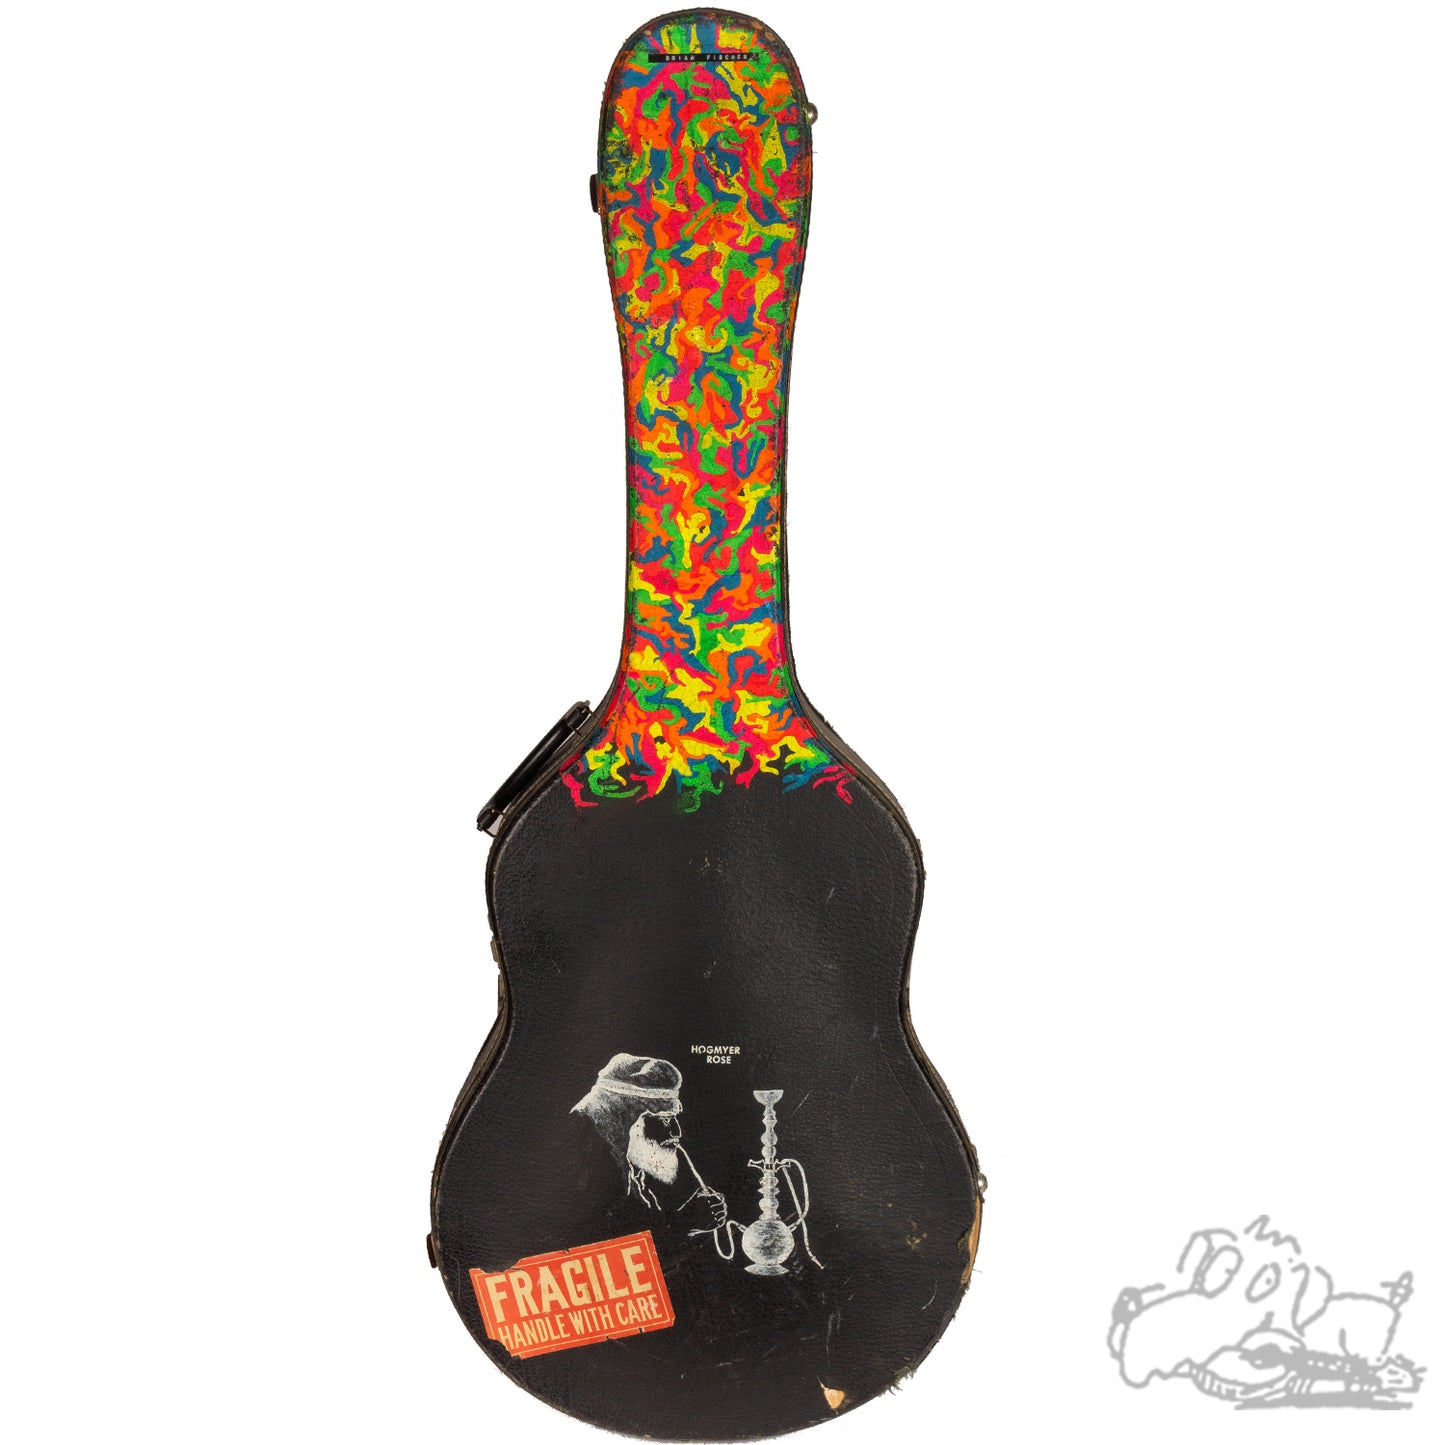 1968 Gibson Trini Lopez Standard